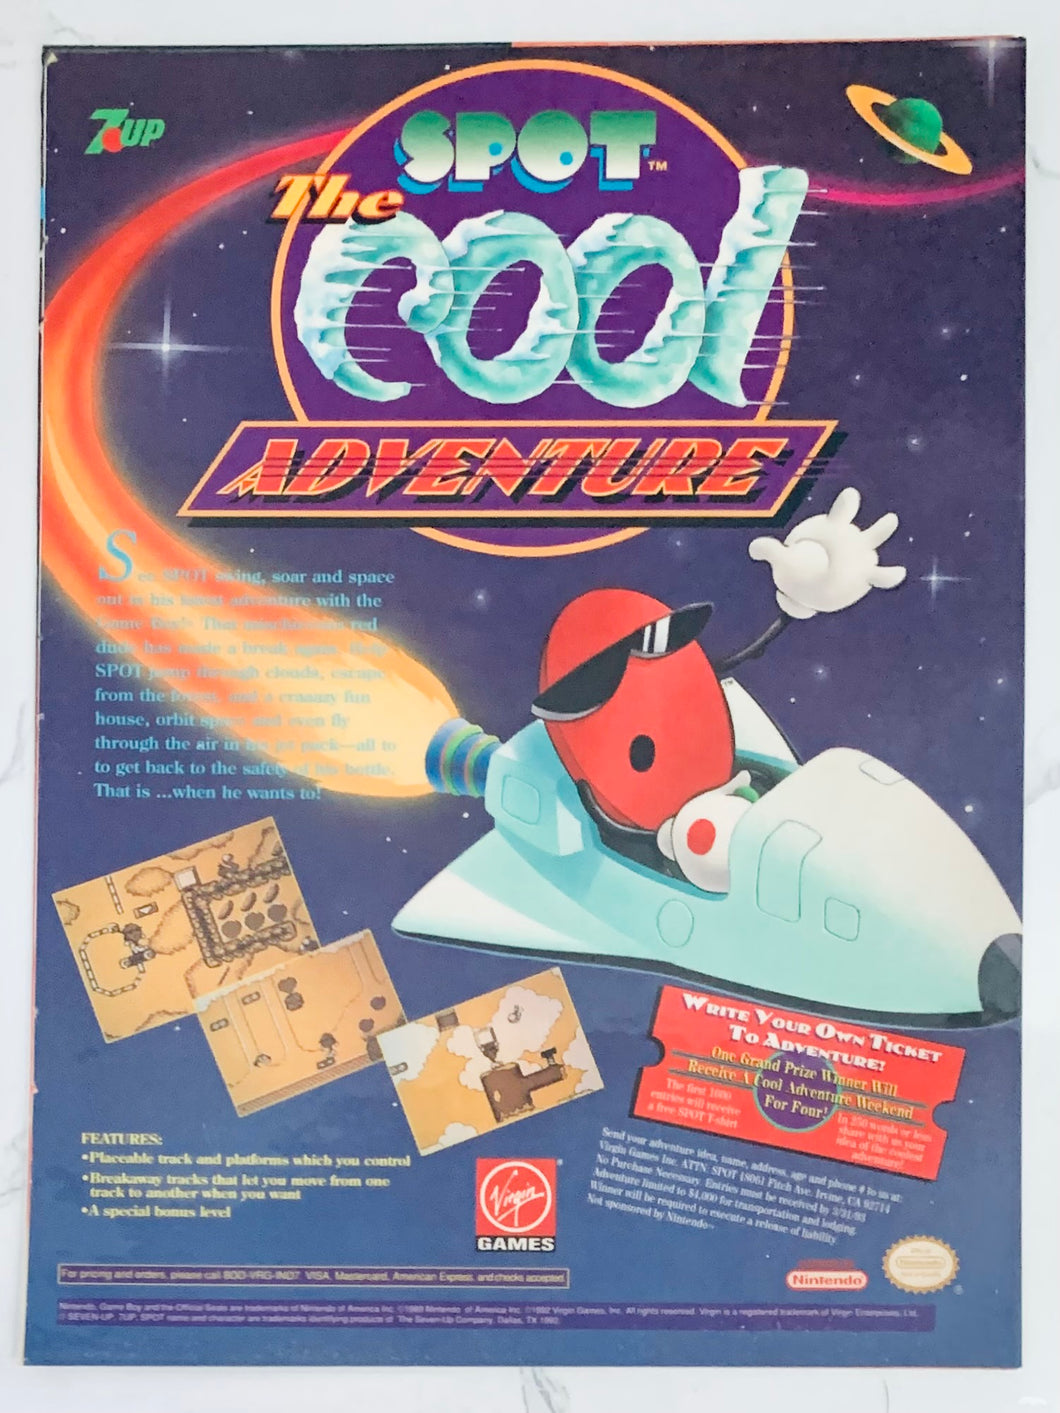 The Cool Spot Adveture - NES - Original Vintage Advertisement - Print Ads - Laminated A4 Poster